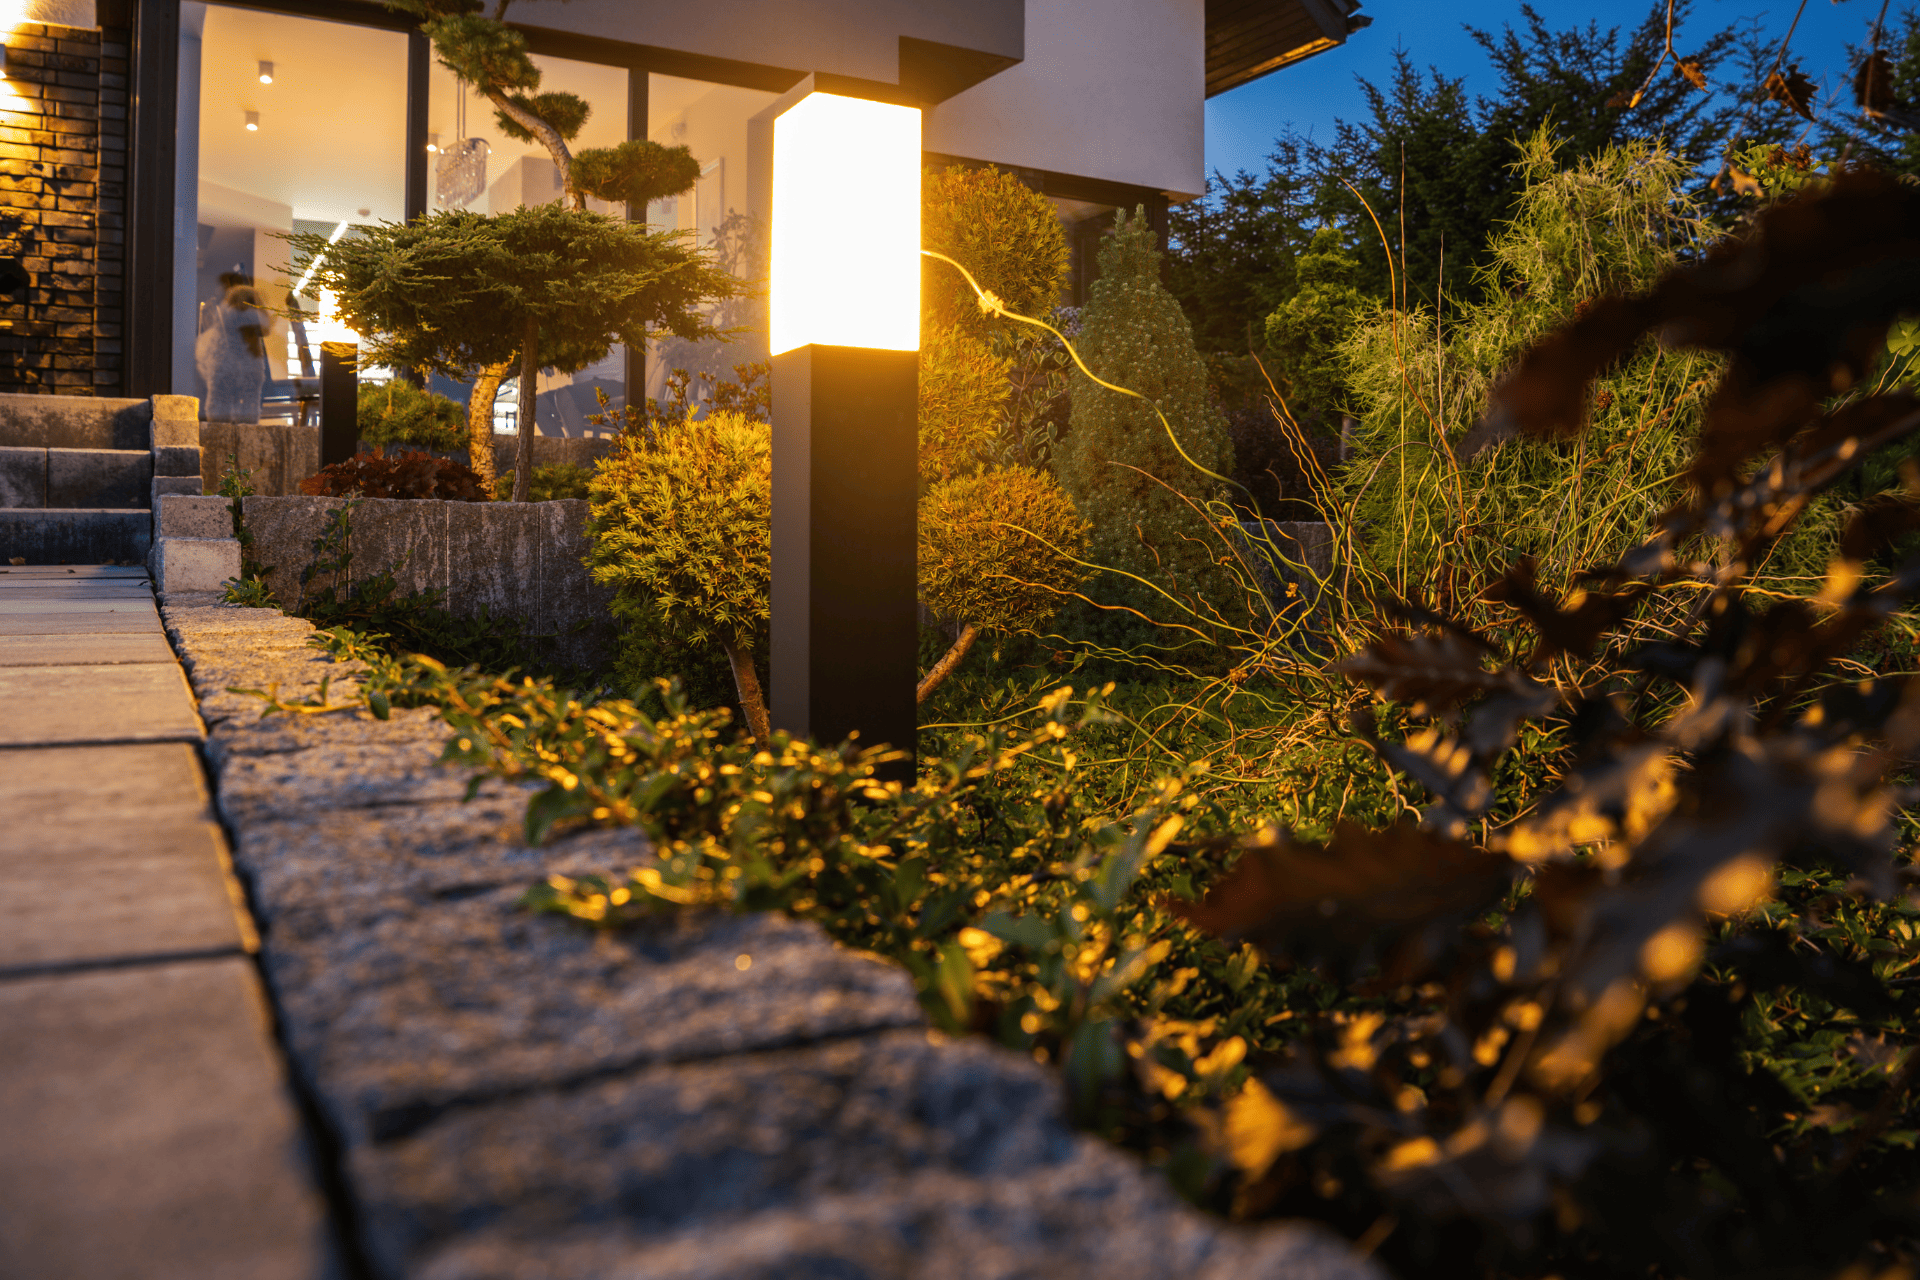 Bright outdoor lighting lighting up walkway of landscaped backyard at night